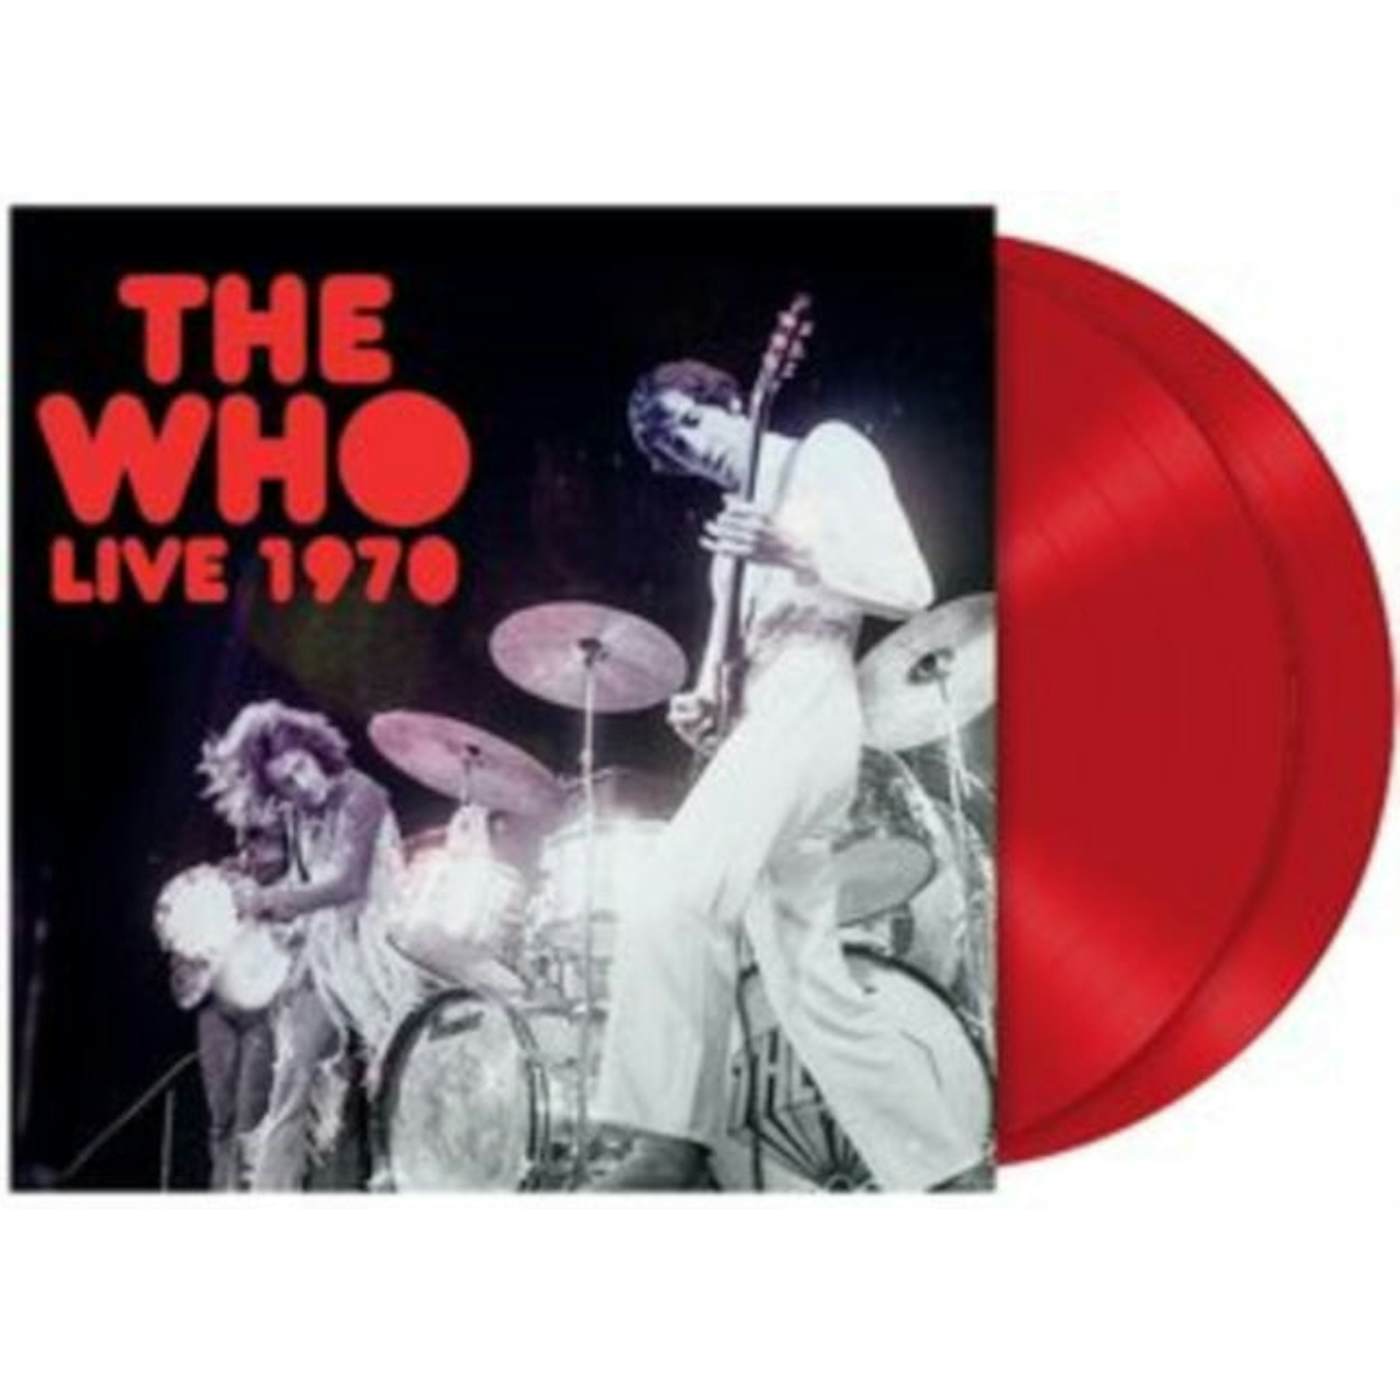 The Who LP - Live 1970 (Vinyl)